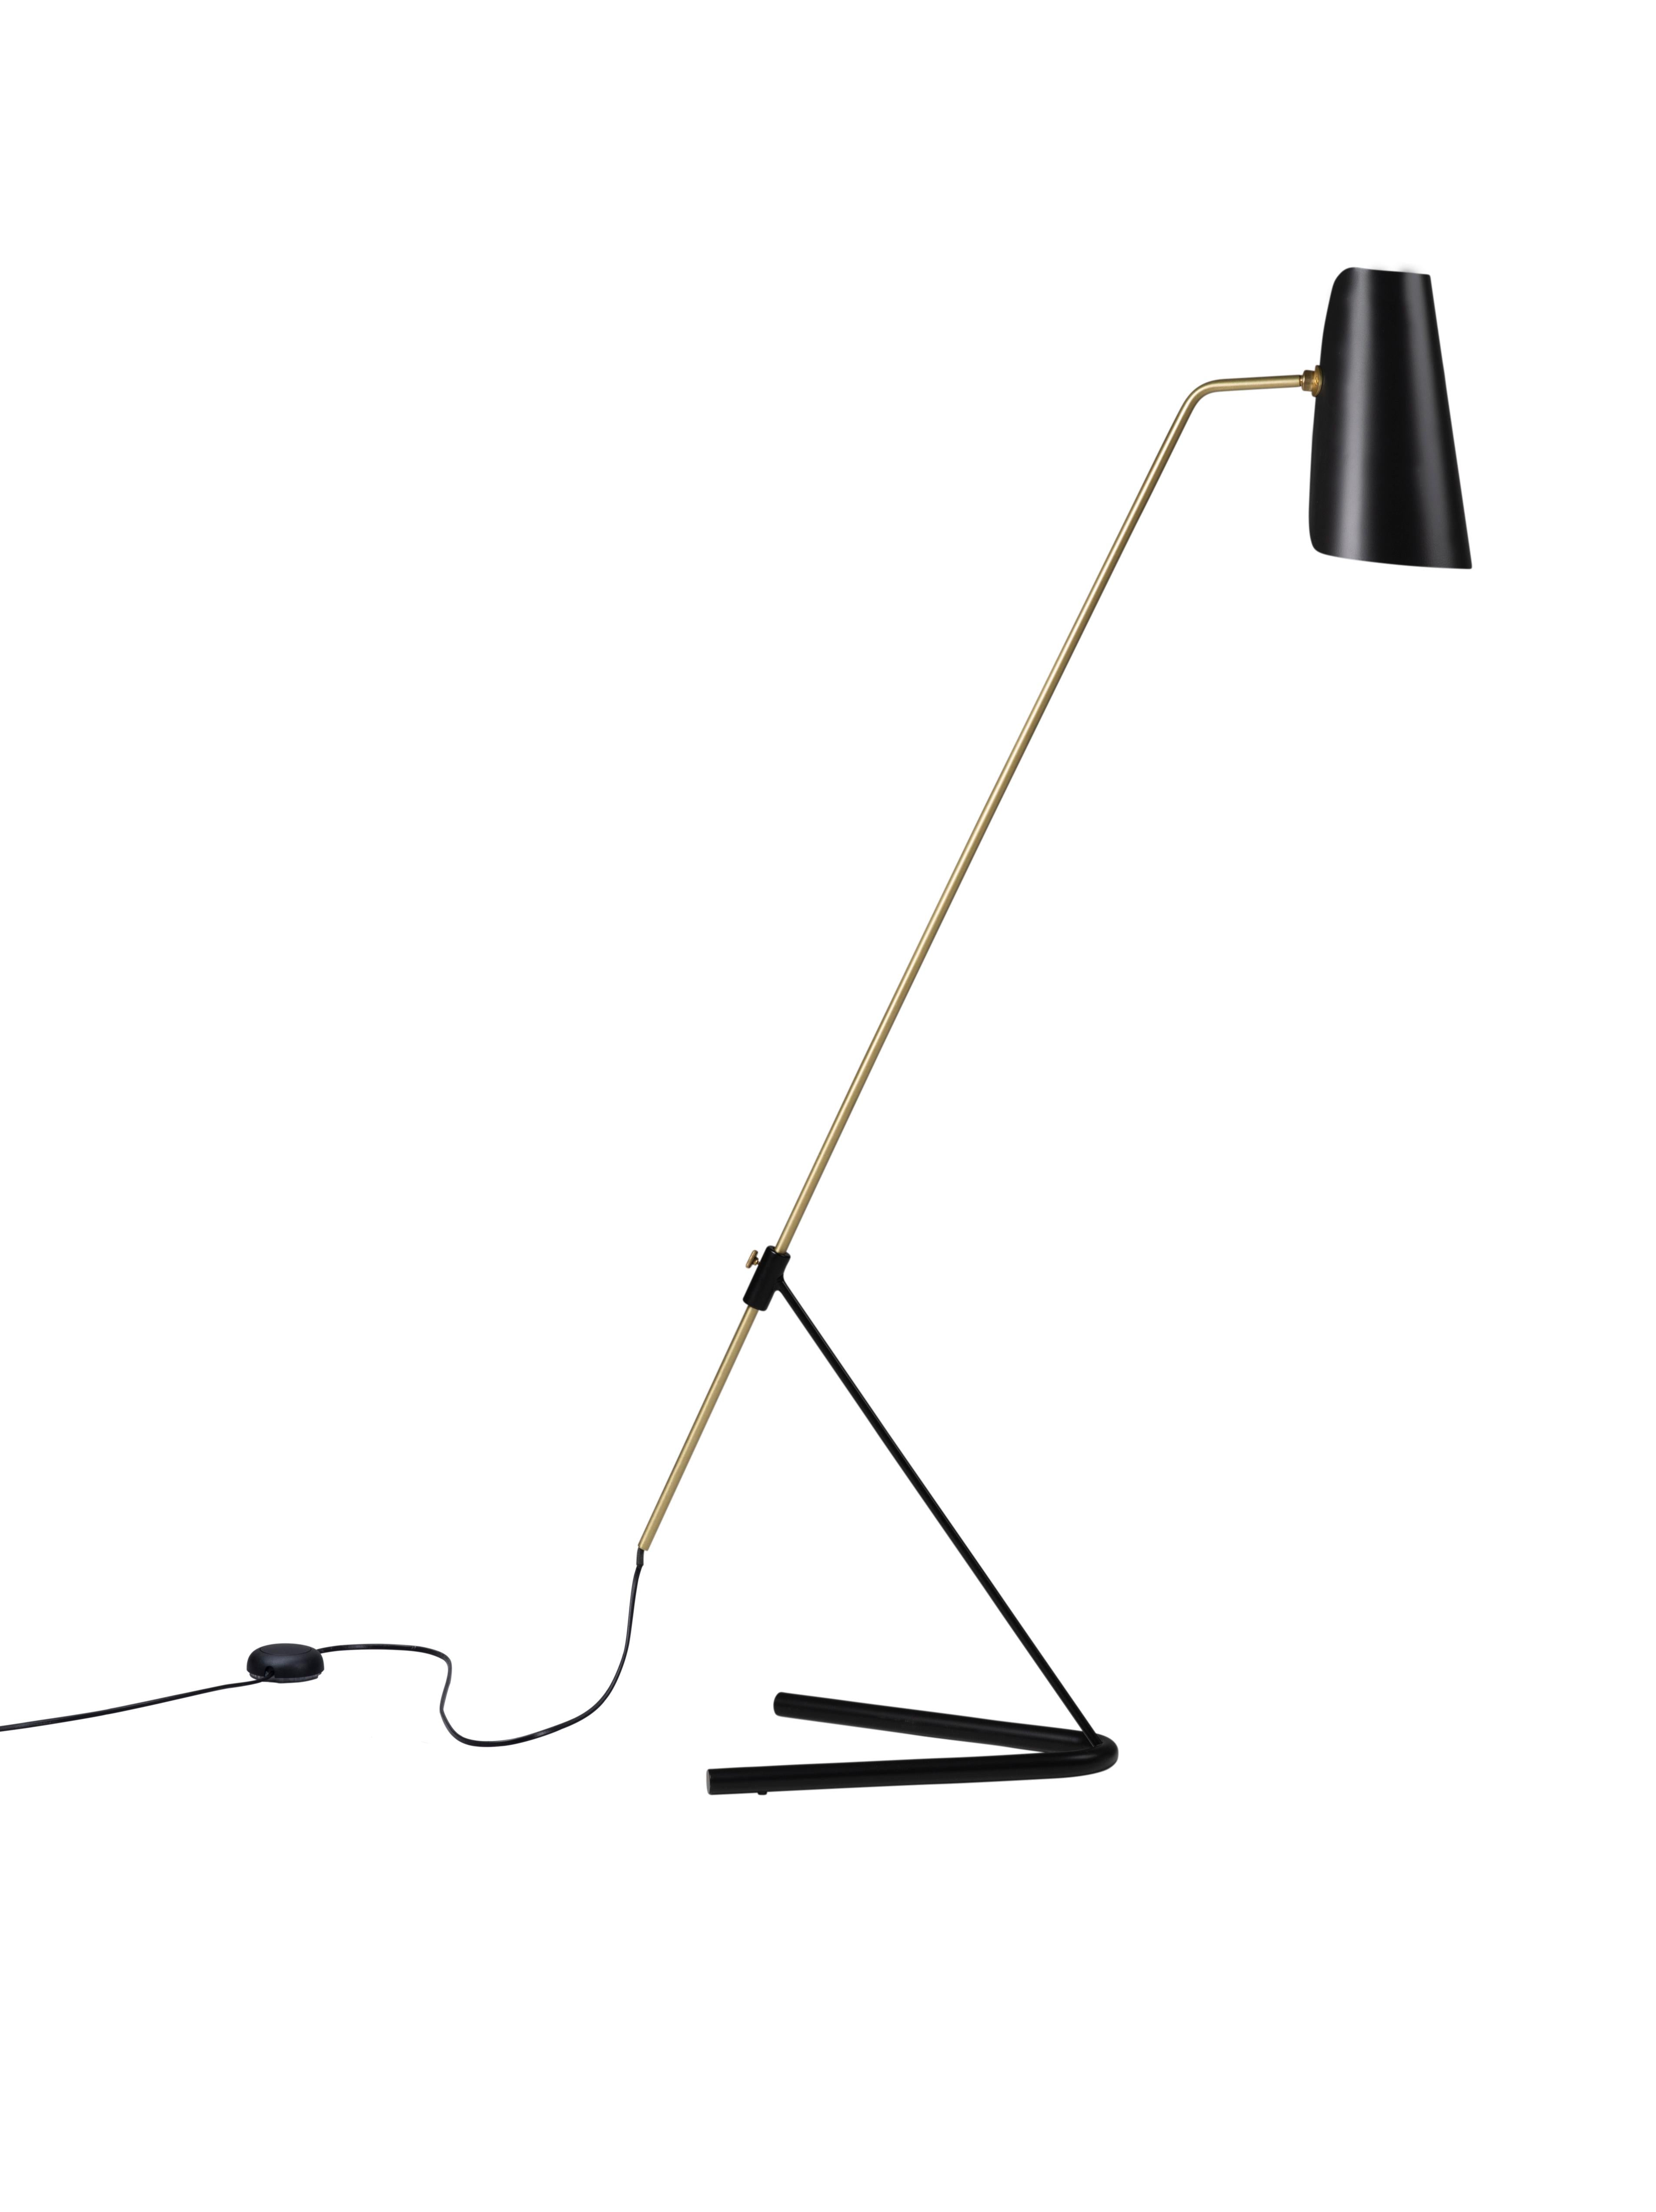 Pierre Guariche 'G21' Adjustable Floor Lamp for Sammode Studio in Black For Sale 3